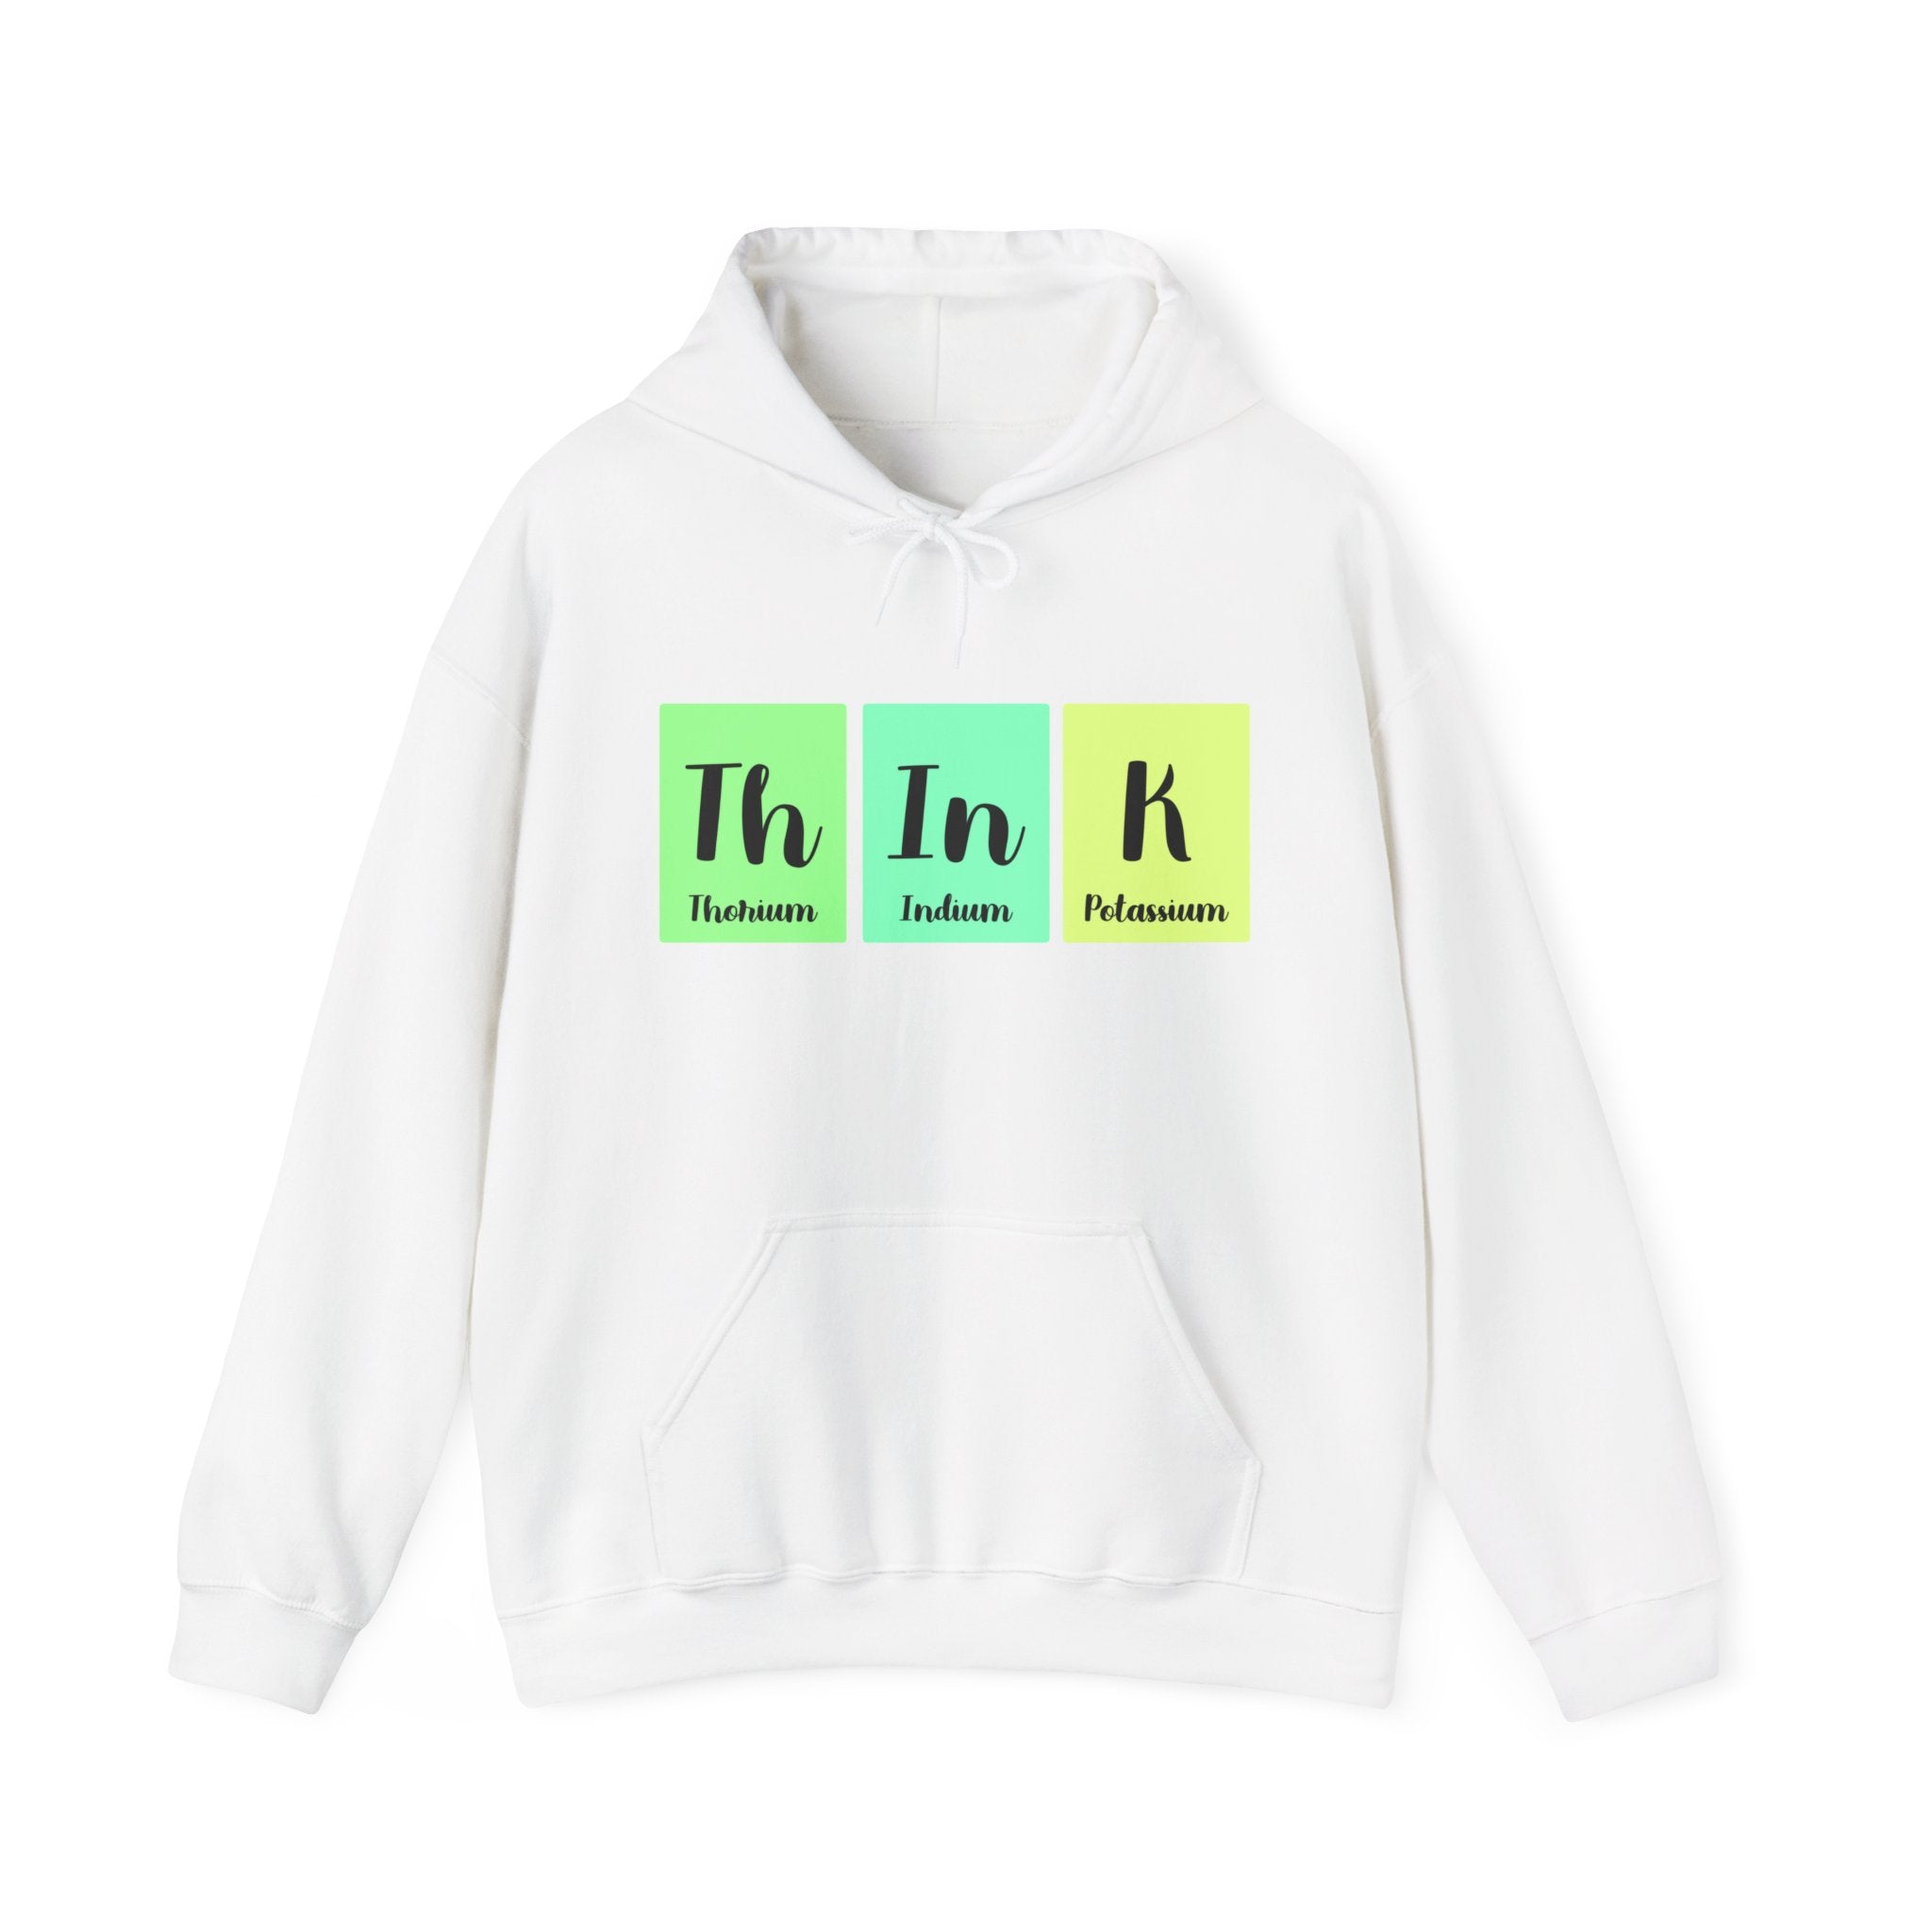 Th-In-K - Hooded Sweatshirt